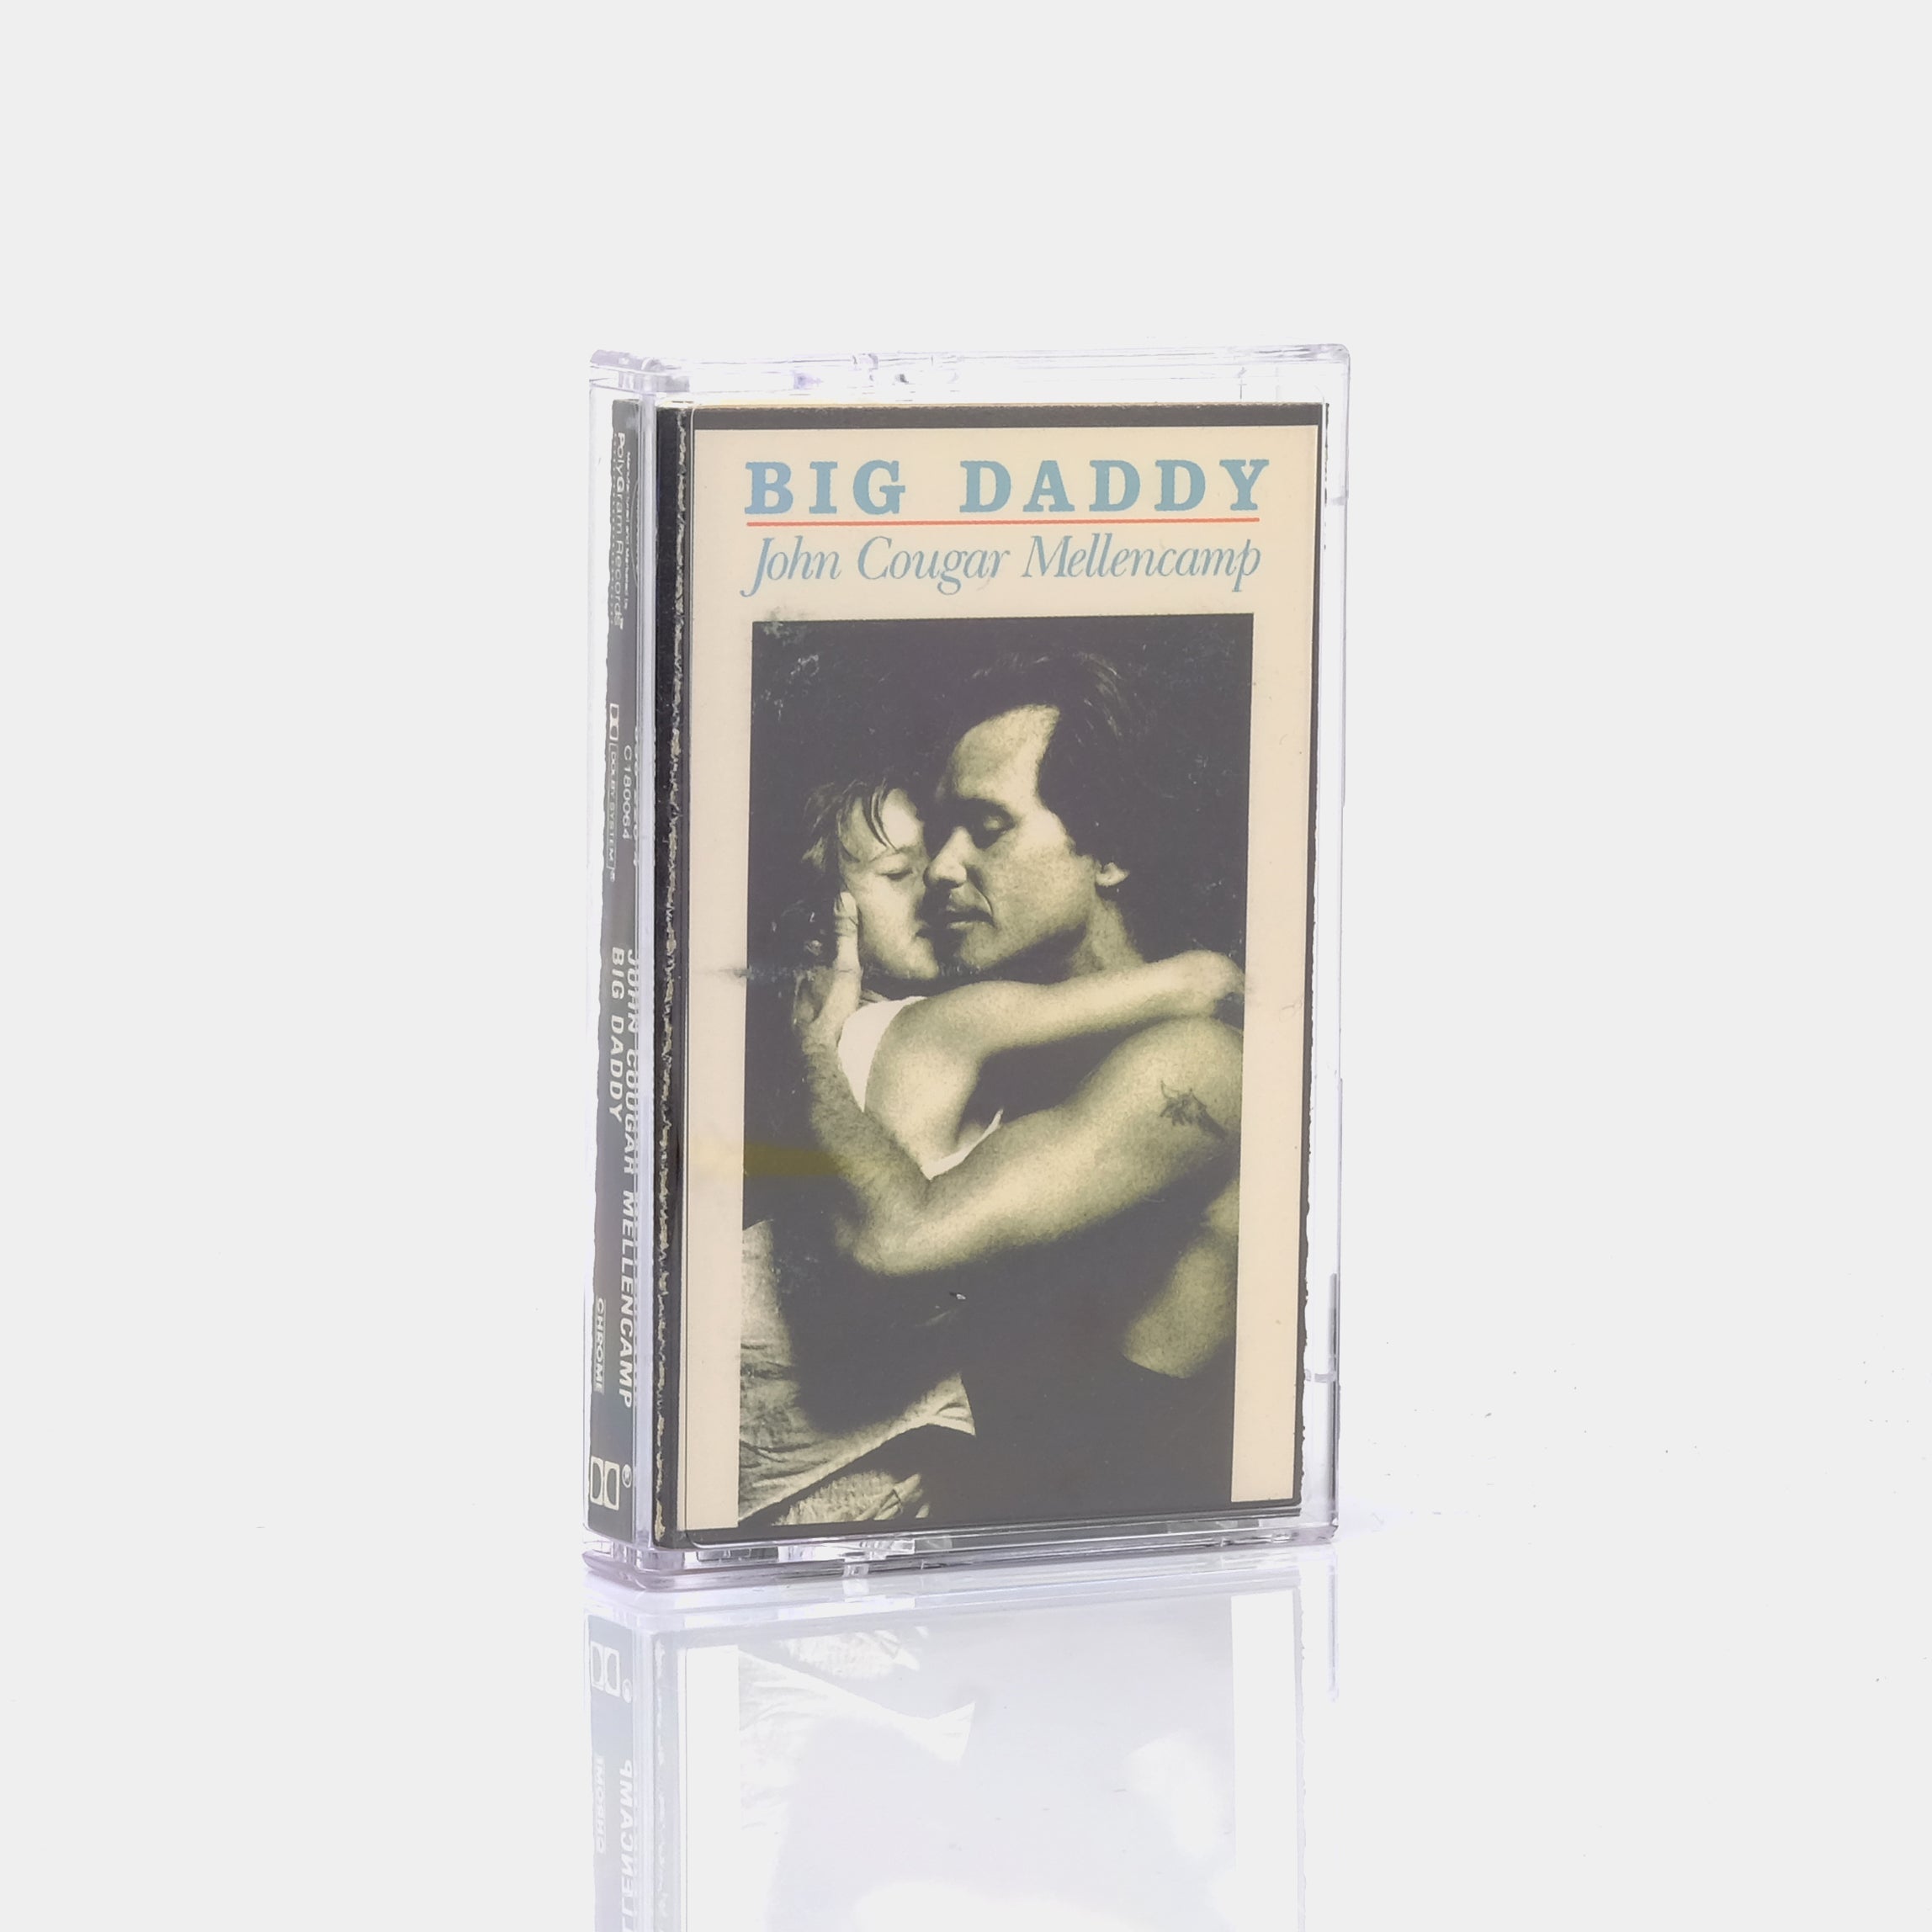 John Cougar Mellencamp - Big Daddy Cassette Tape